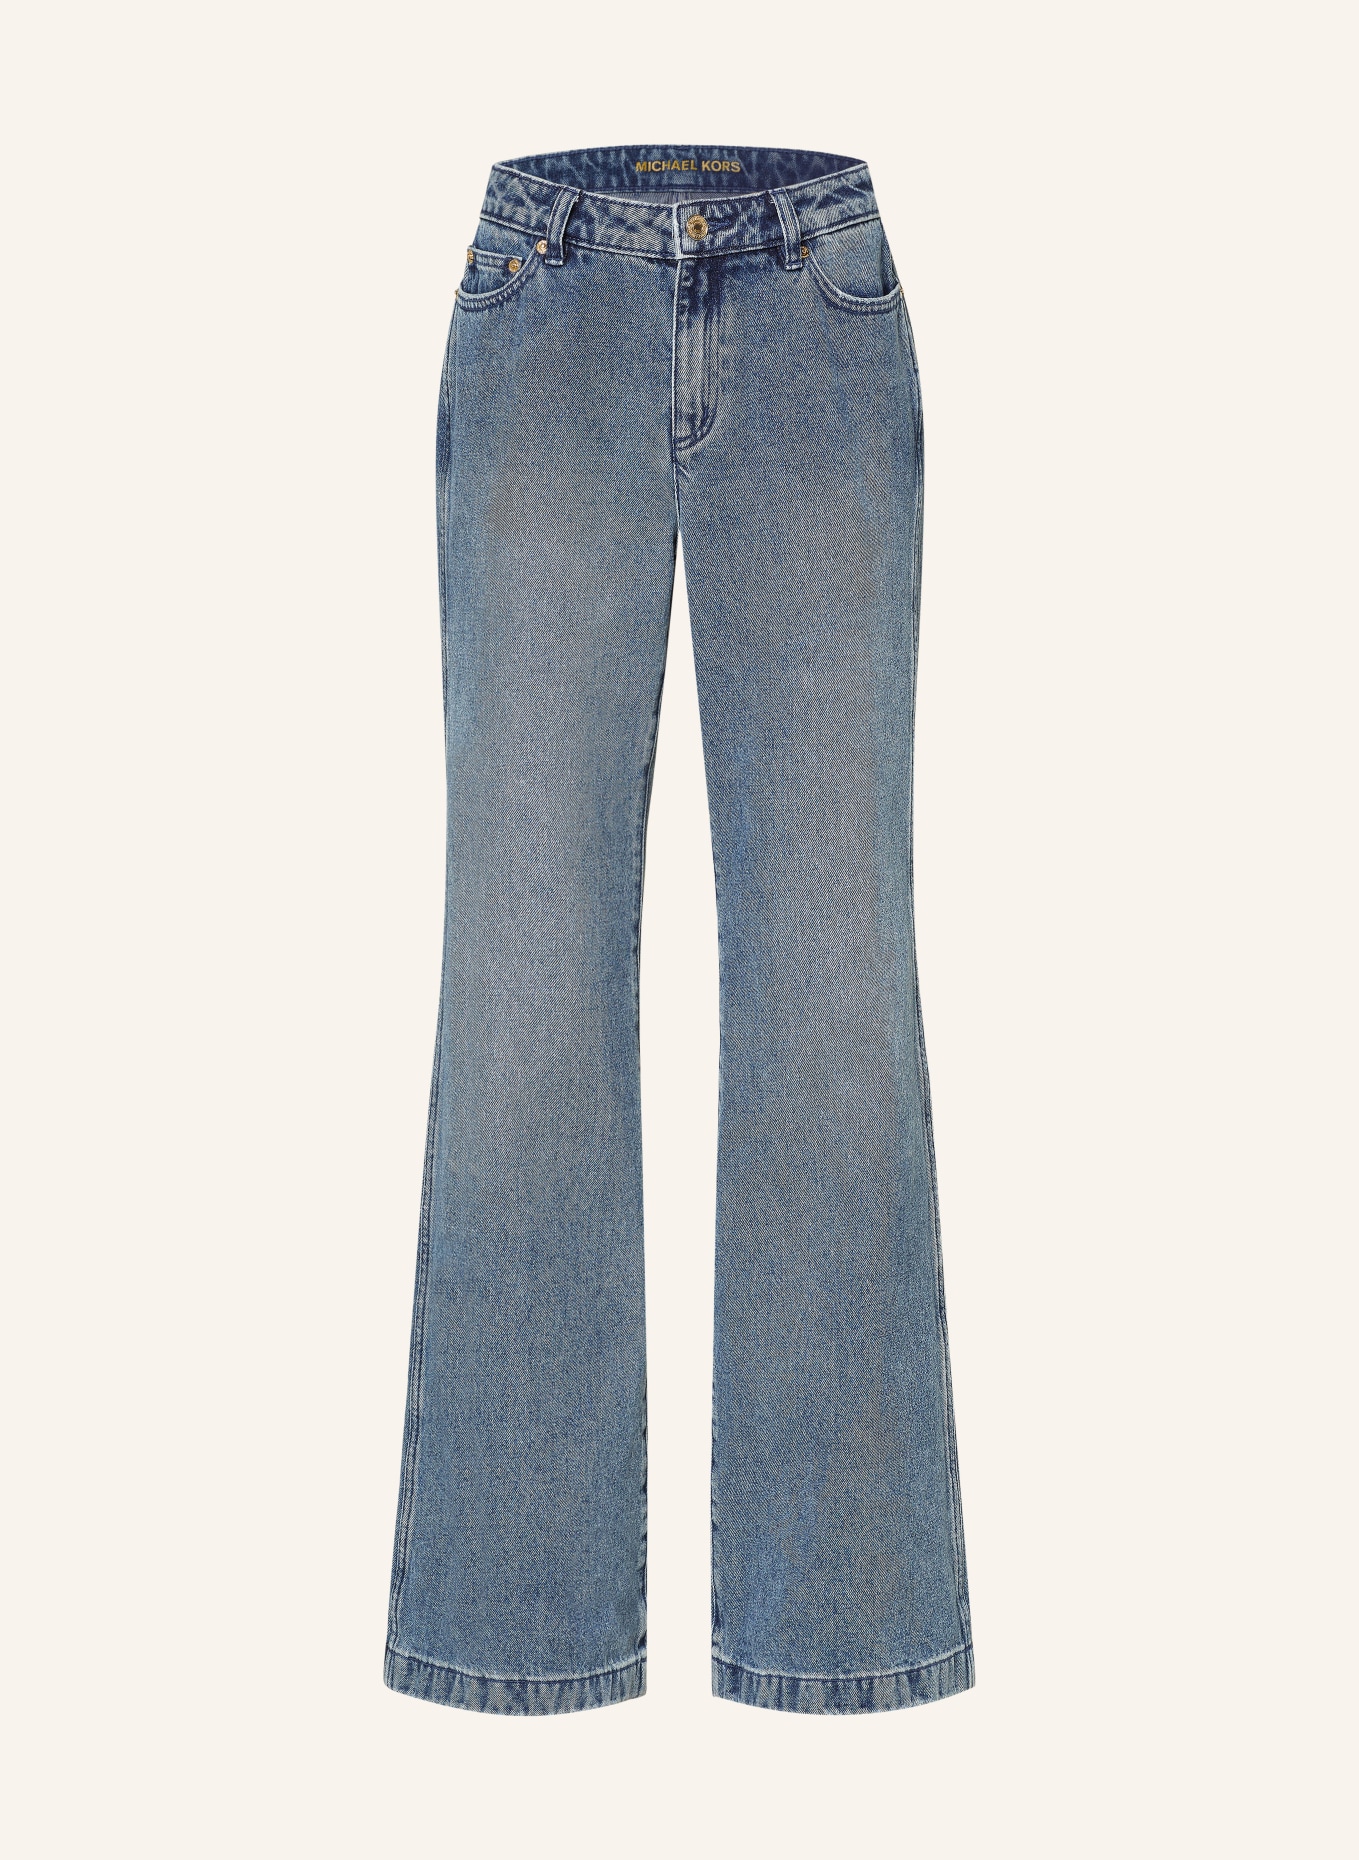 MICHAEL KORS Flared Jeans, Farbe: 913 DUSK BLUE WASH (Bild 1)